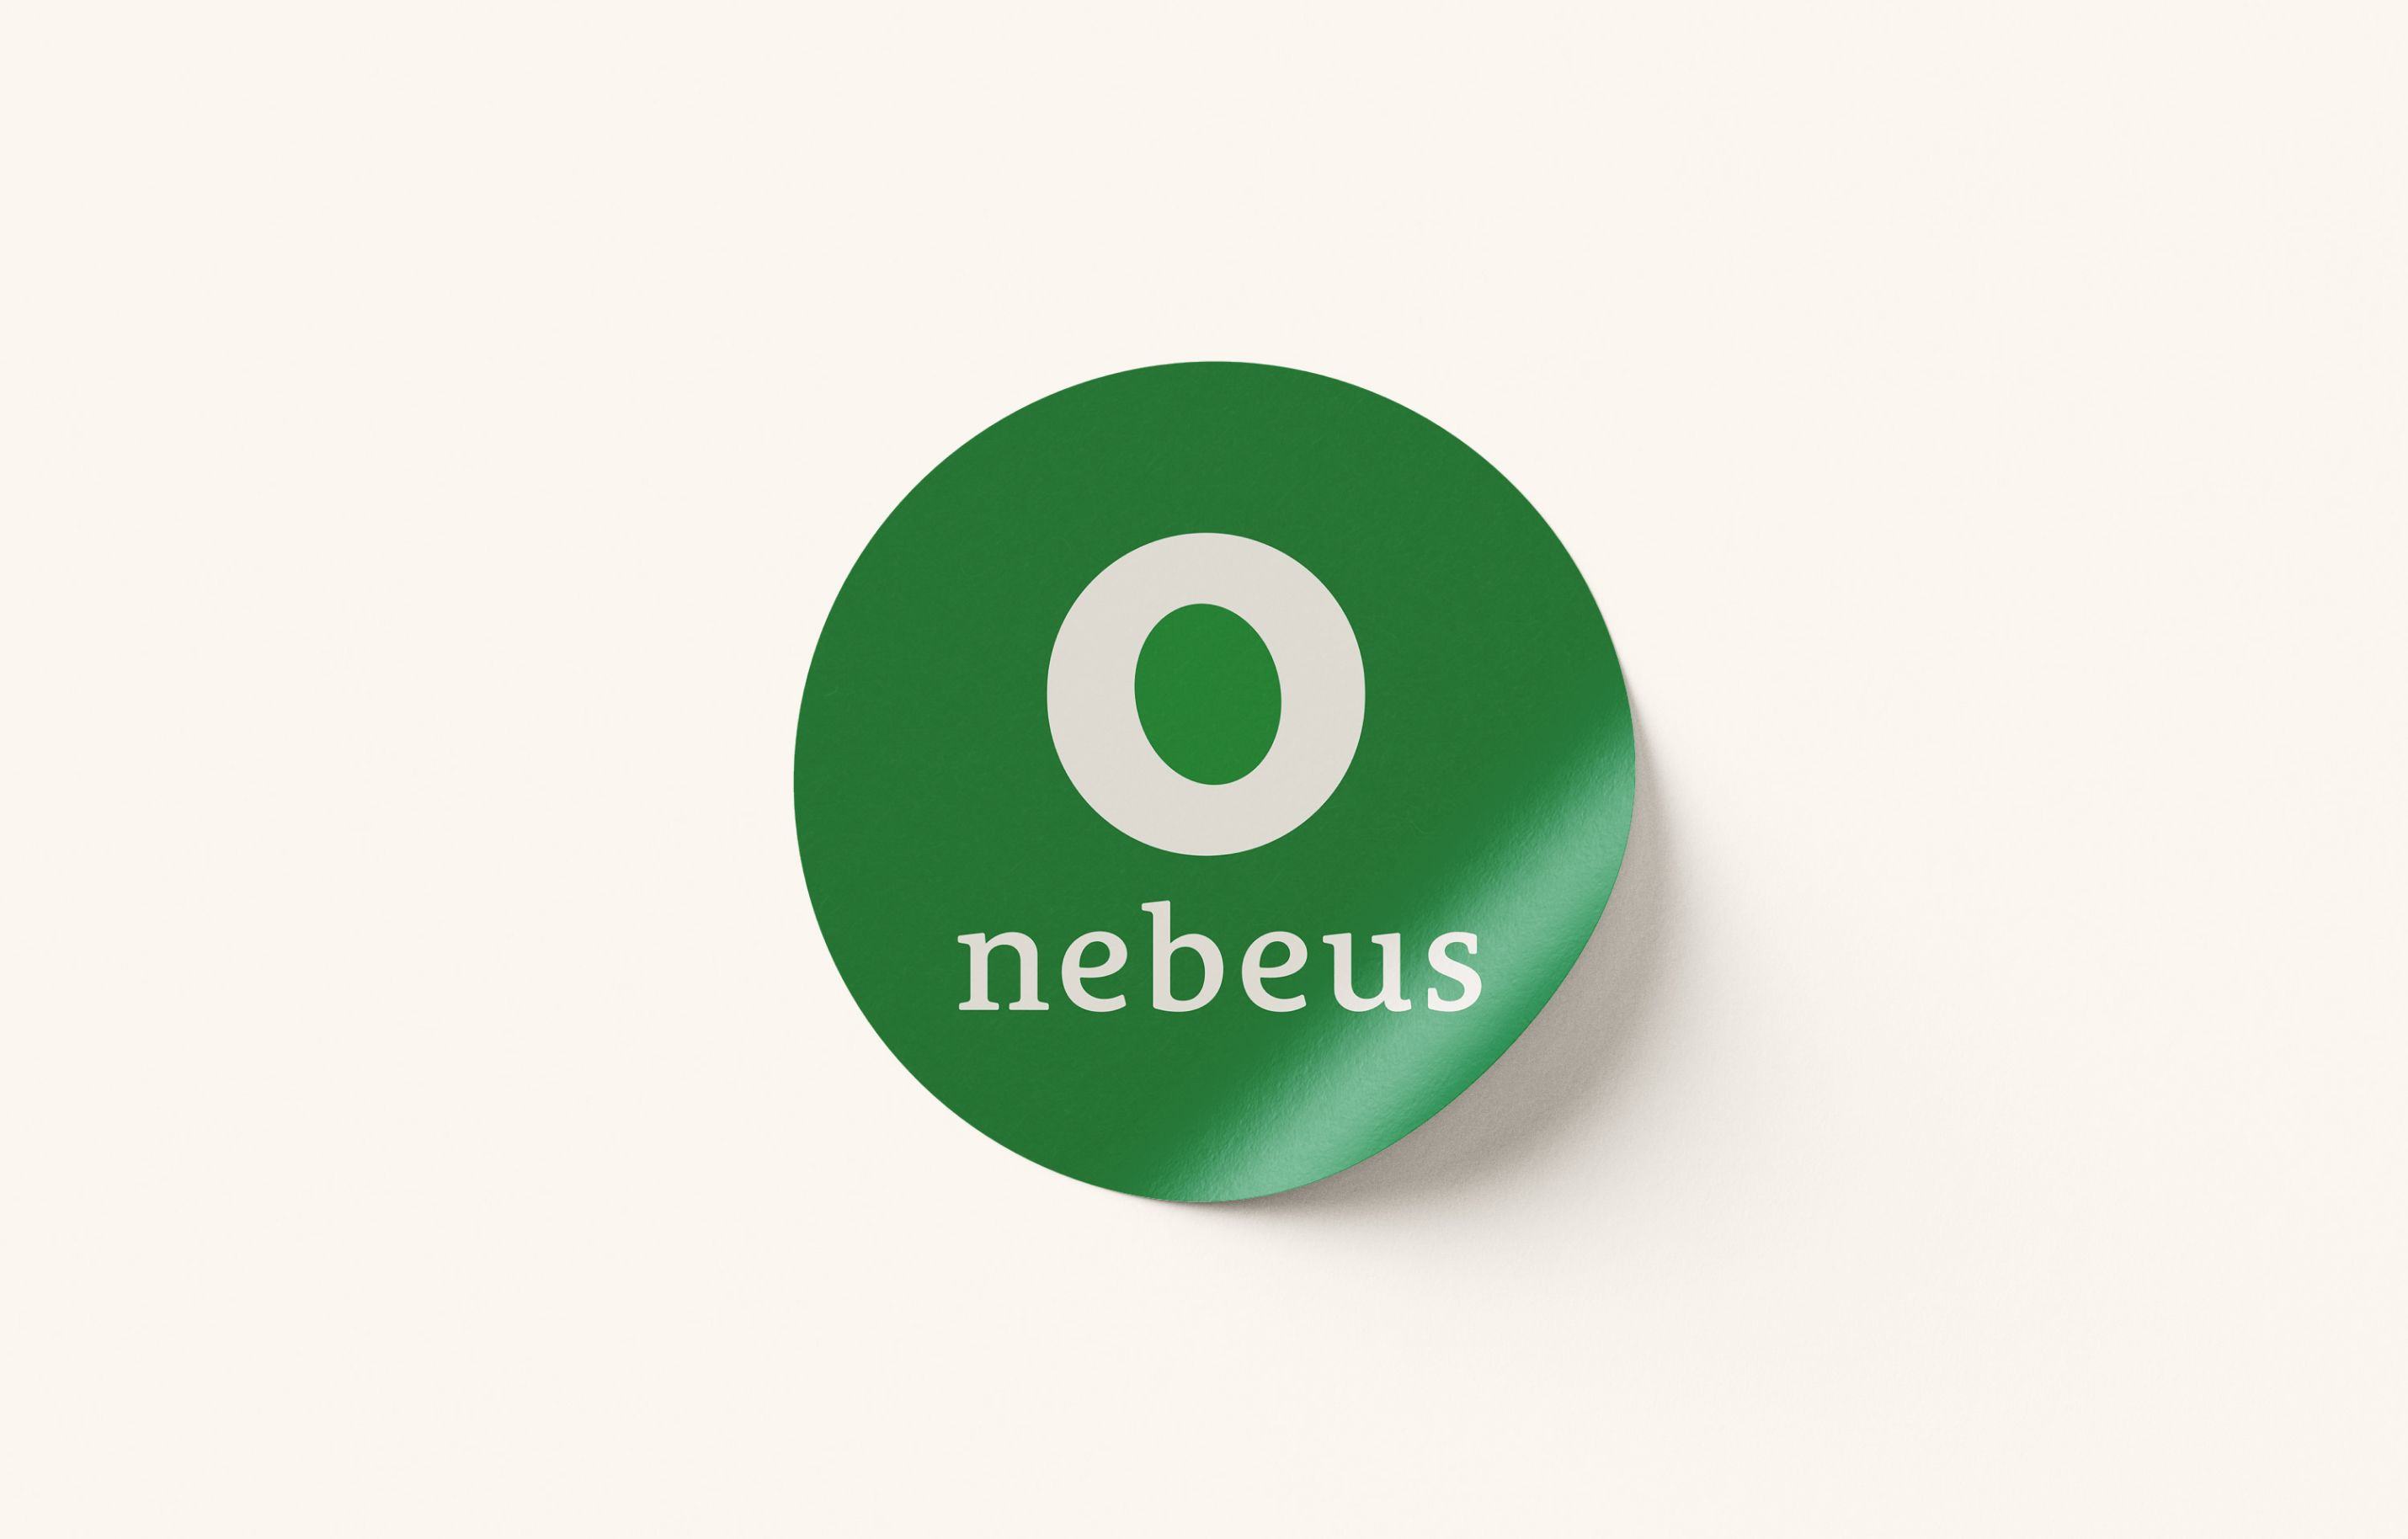 Nebeus exchange on an iphone screen